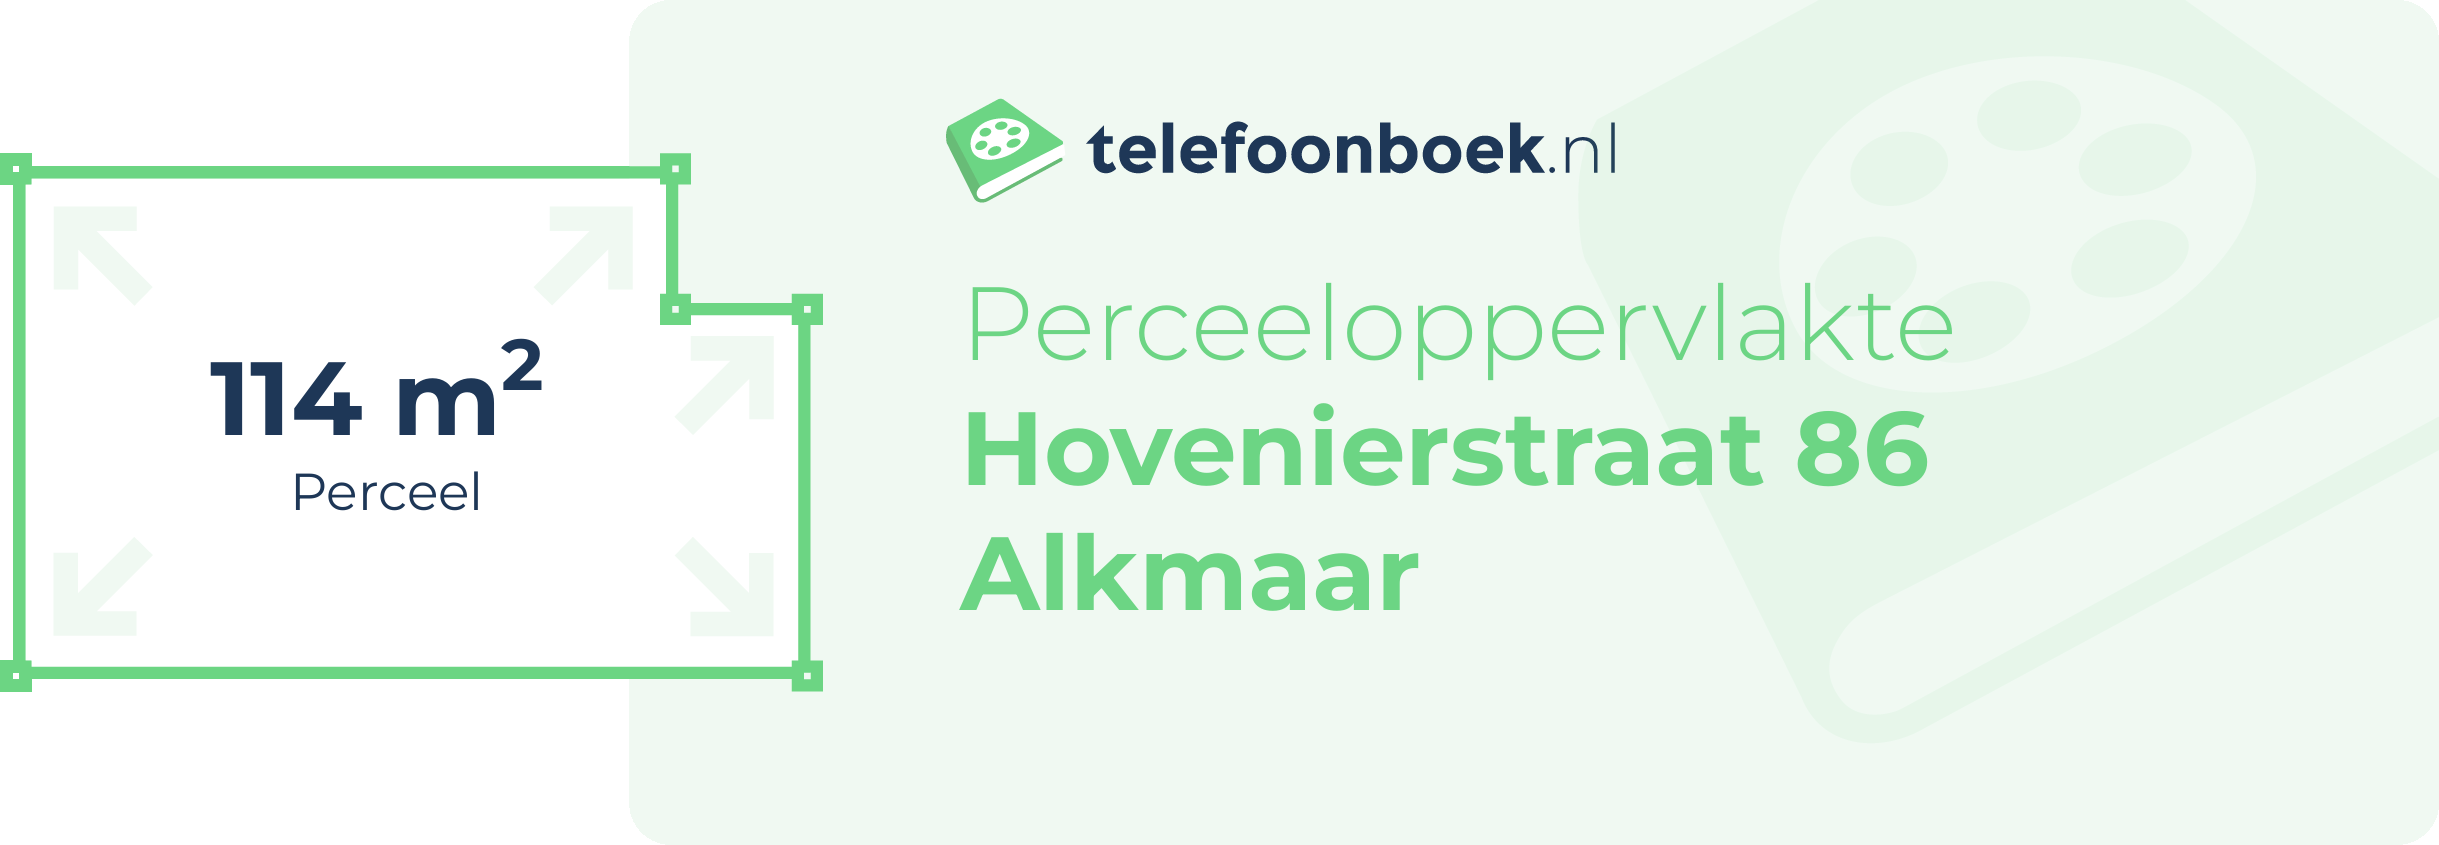 Perceeloppervlakte Hovenierstraat 86 Alkmaar